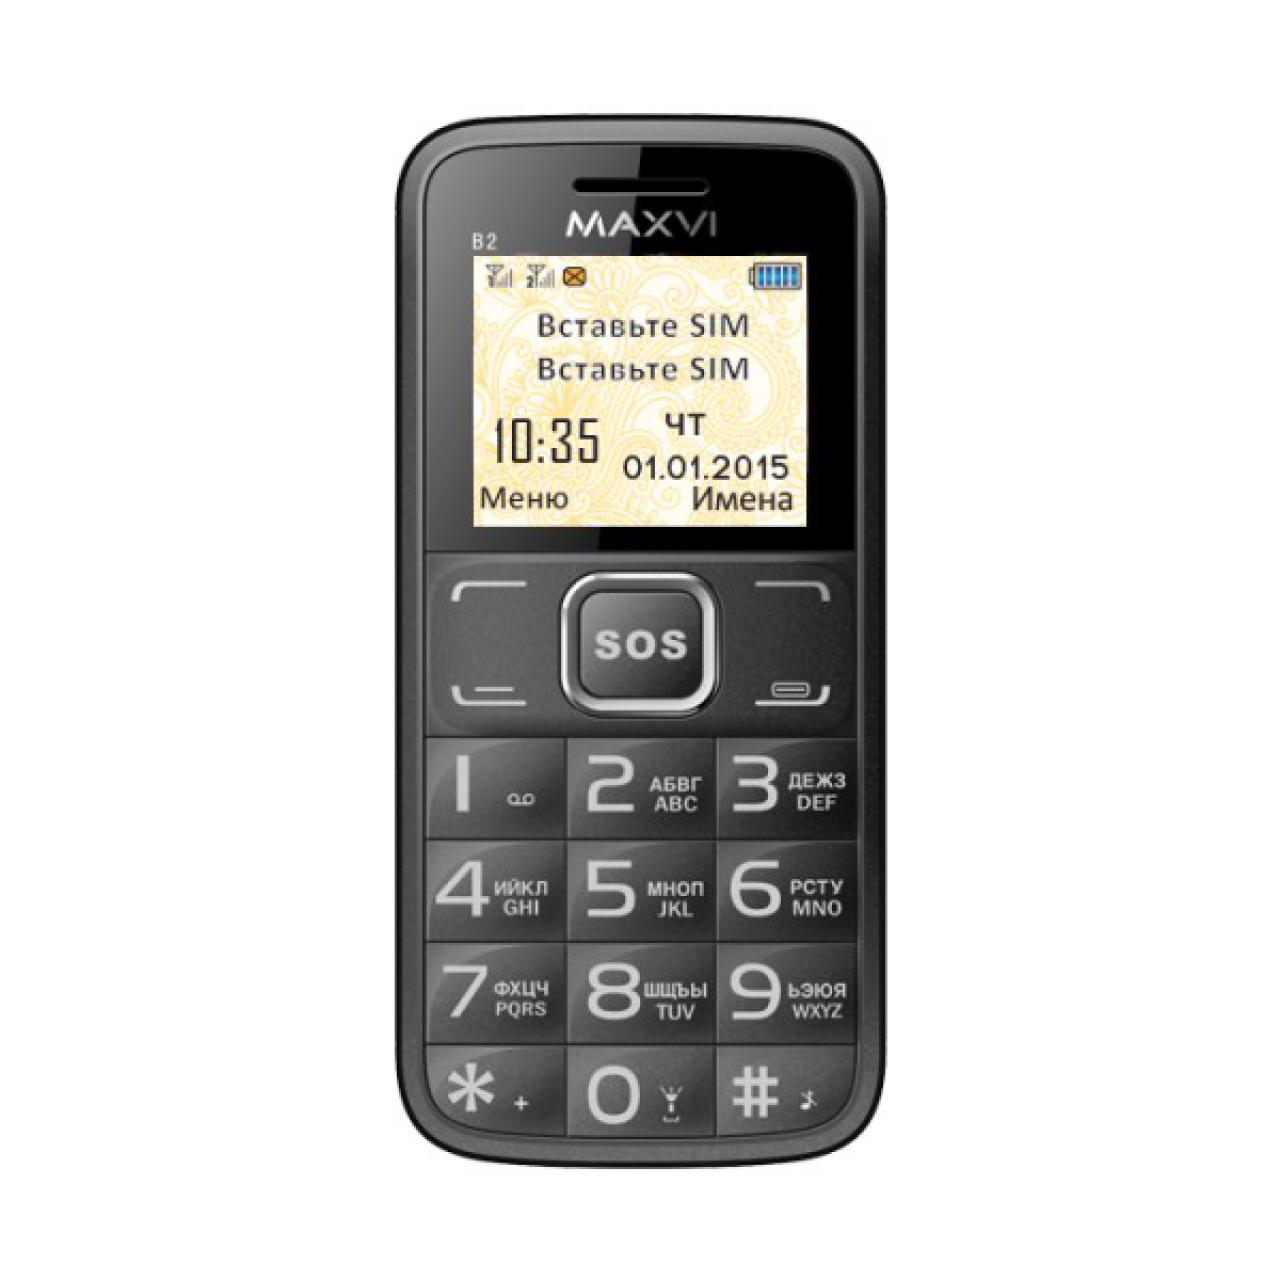 Сотовые телефоны чебоксары. Мобильный телефон Maxvi b2 Black. Мобильный телефон Maxvi b2 coffe. Maxvi b2 Coffee (2 SIM). Maxvi b2 Grey.